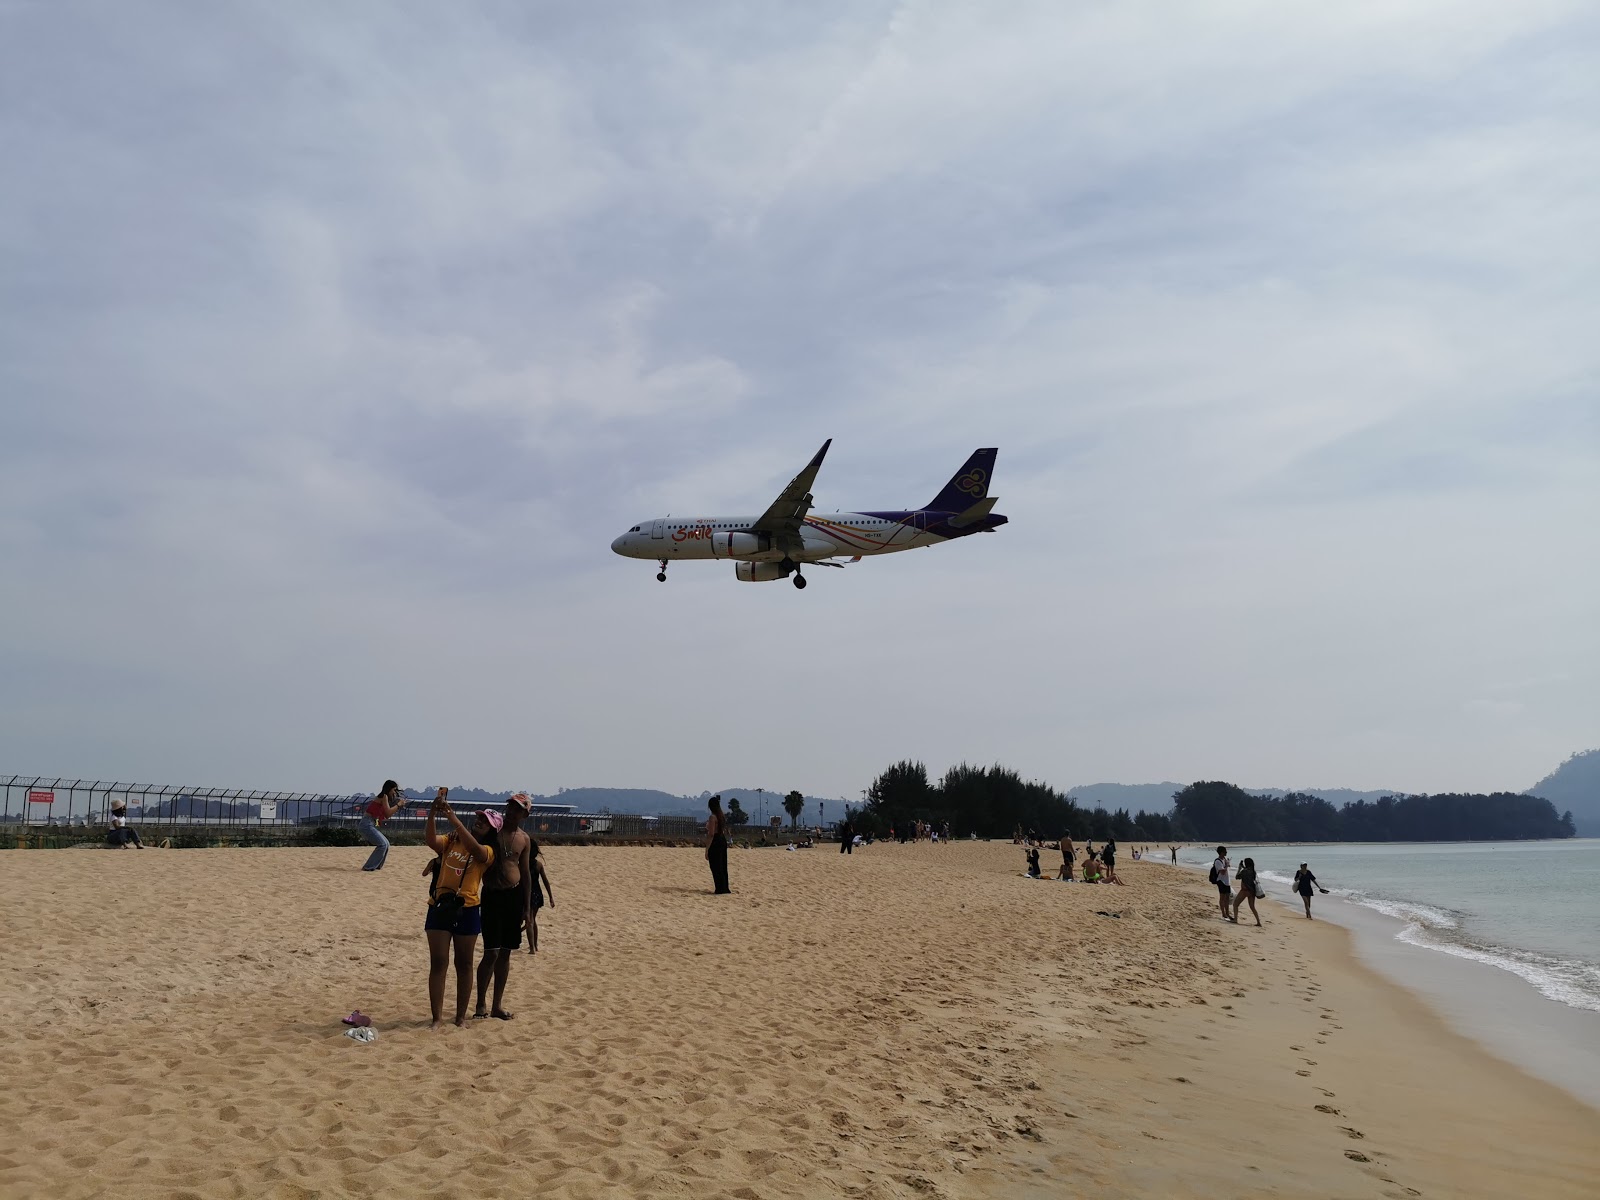 Fotografie cu Mai Khao Beach - Airport cu nivelul de curățenie in medie